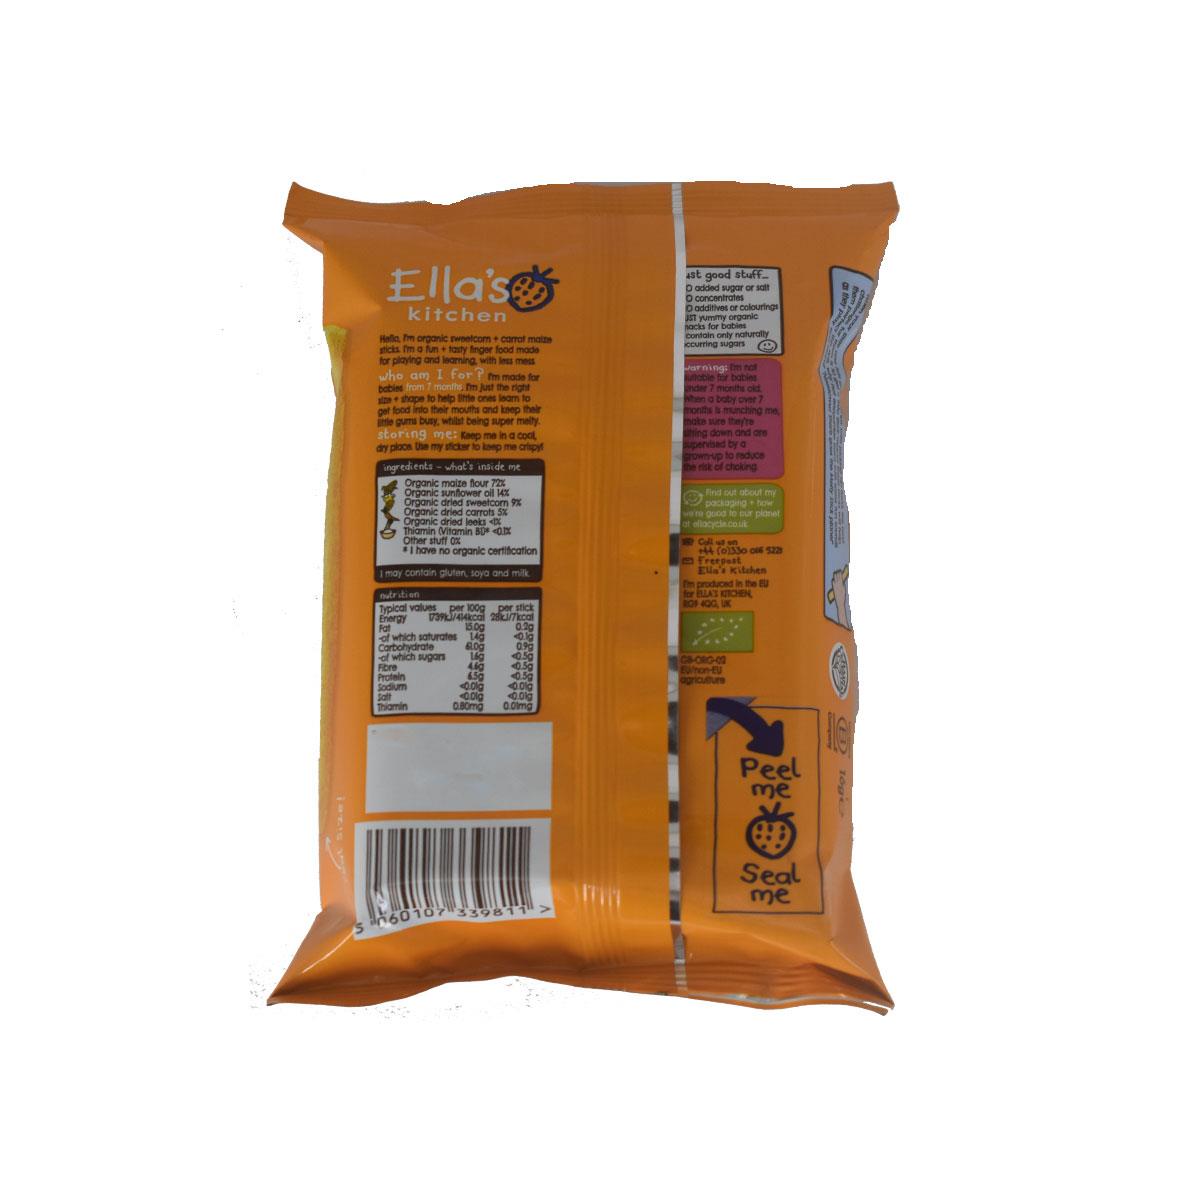 Ellas Kitchen Melty Sticks, Sweetcorn + Carrot - 16g